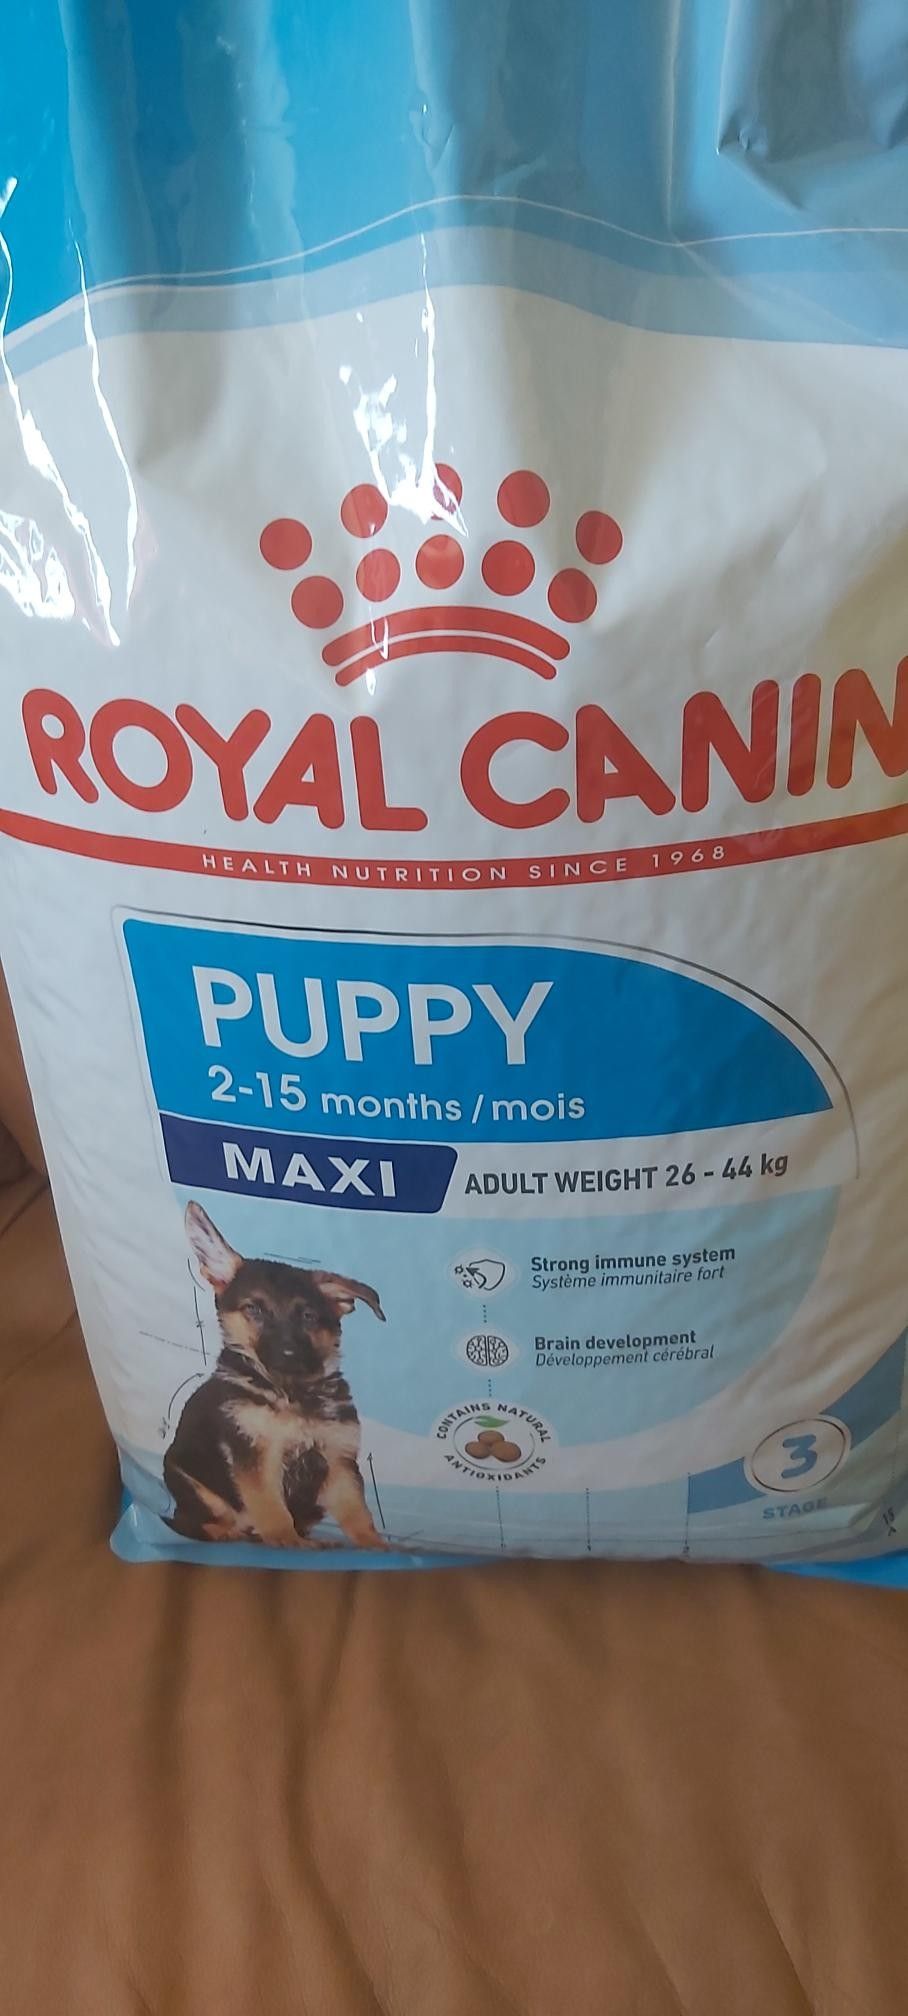 Koiranruoka royal canin puppy 2-15 monnths maxi